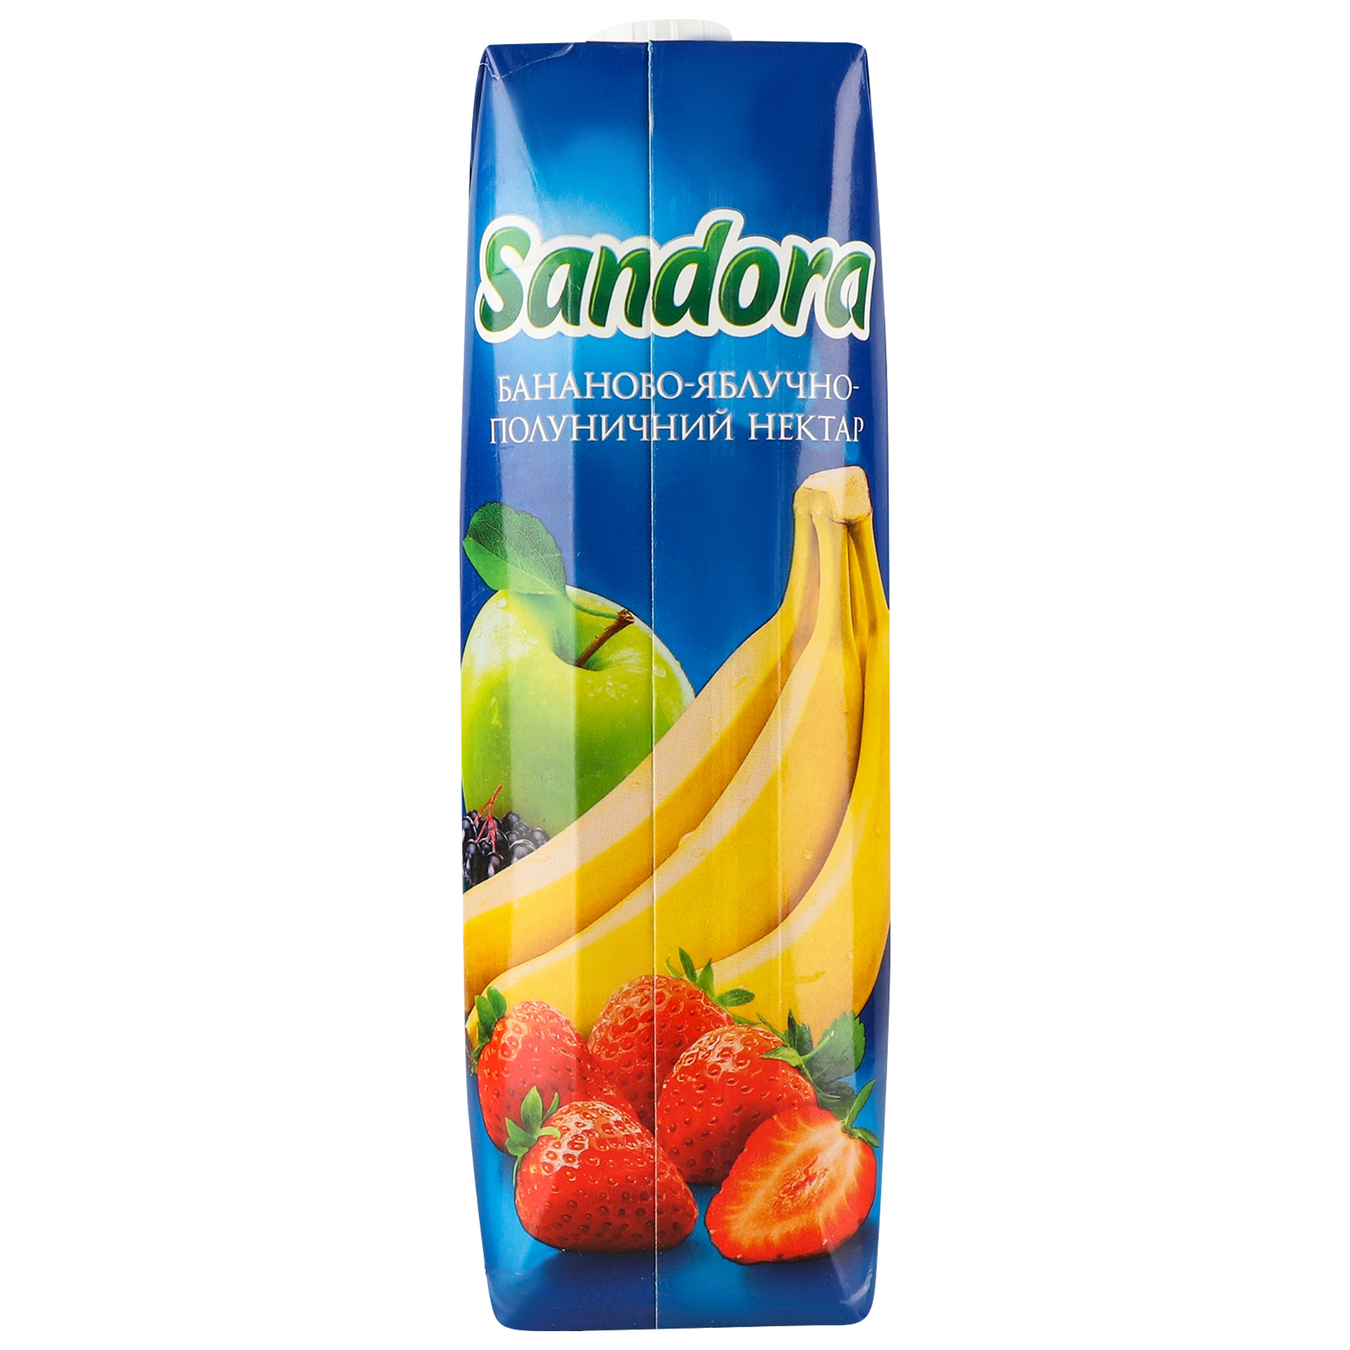 Sandora Banana-Apple-Strawberry Nectar 0,95l 6